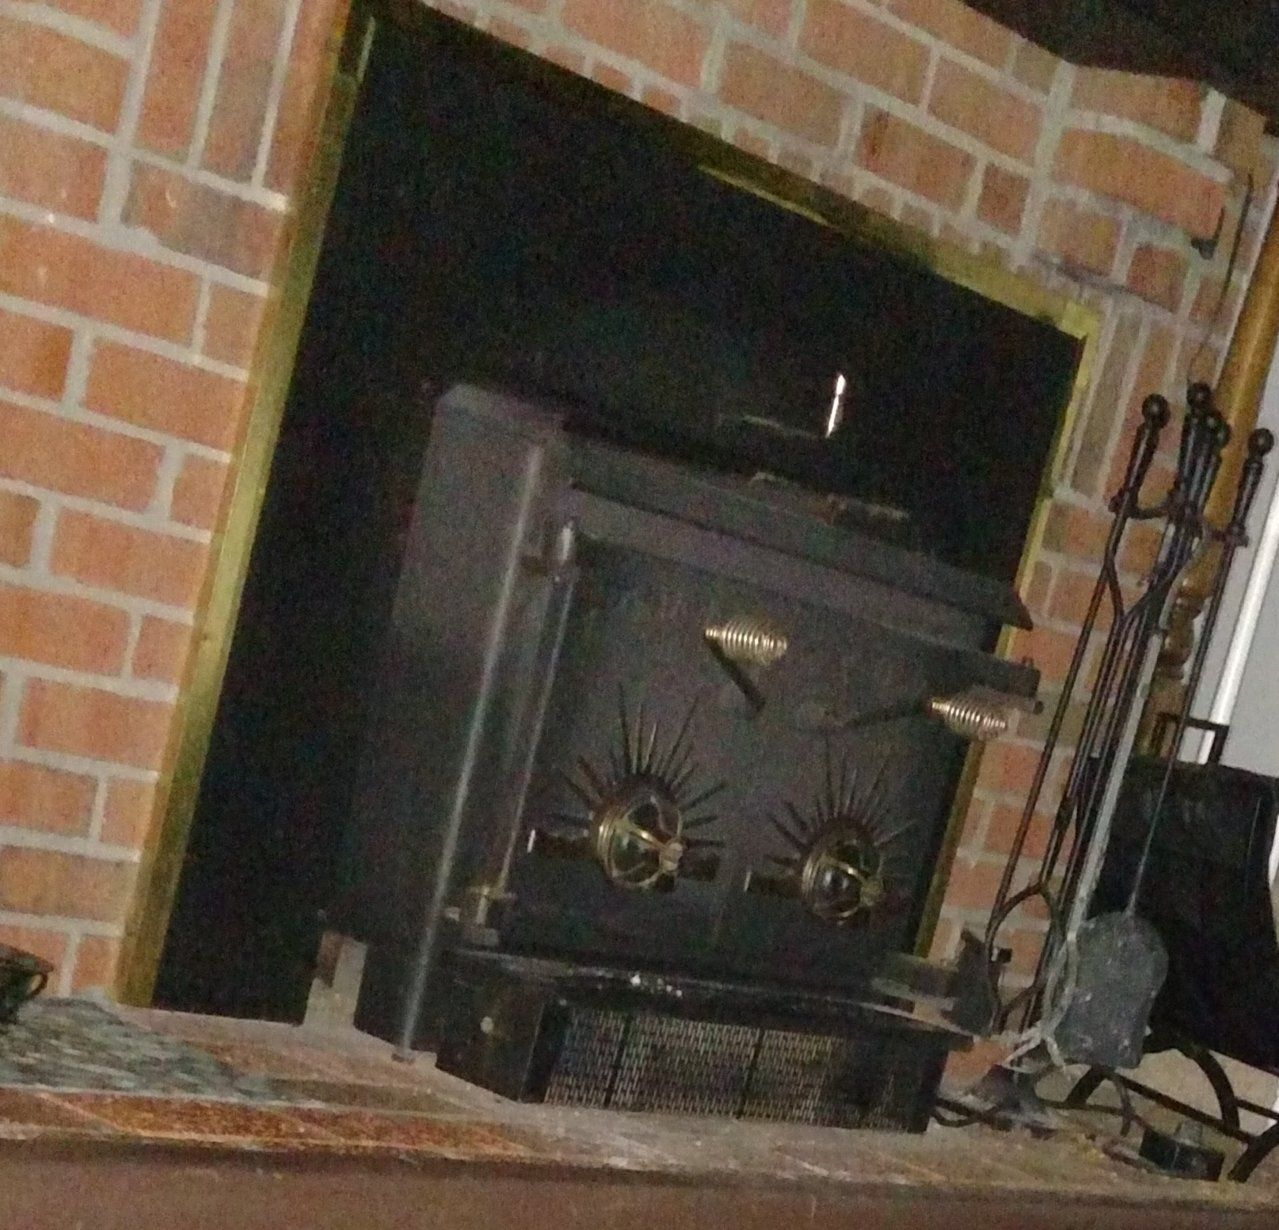 Front my fireplace "Alaska Kodiak"